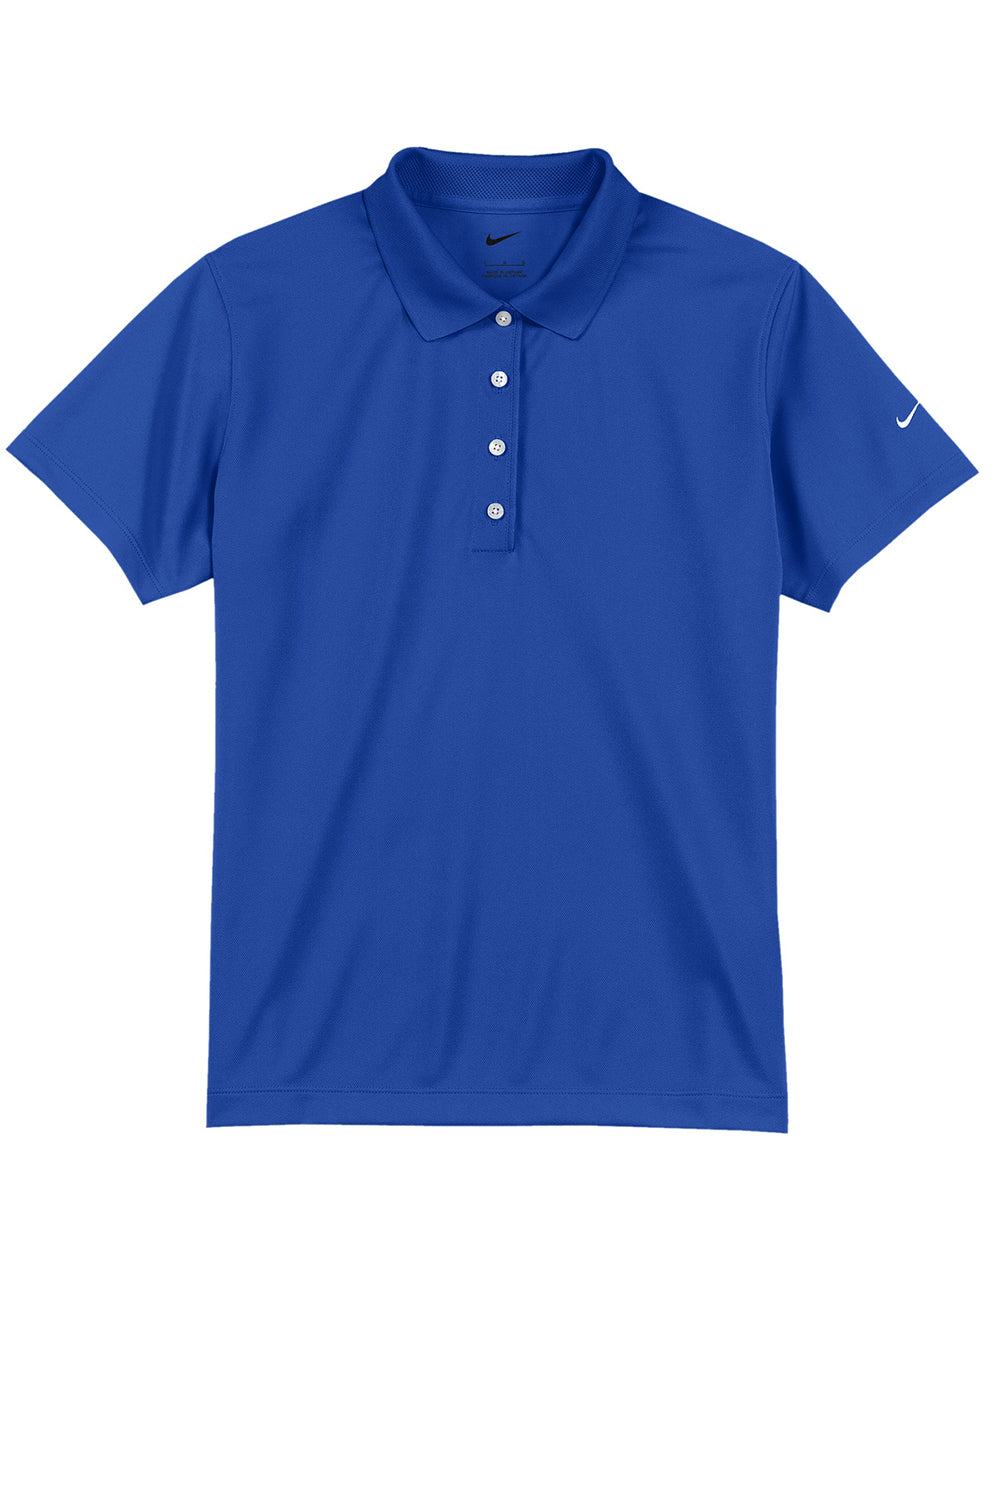 Nike 203697 Womens Tech Basic Dri-Fit Moisture Wicking Short Sleeve Polo Shirt Varsity Royal Blue Flat Front